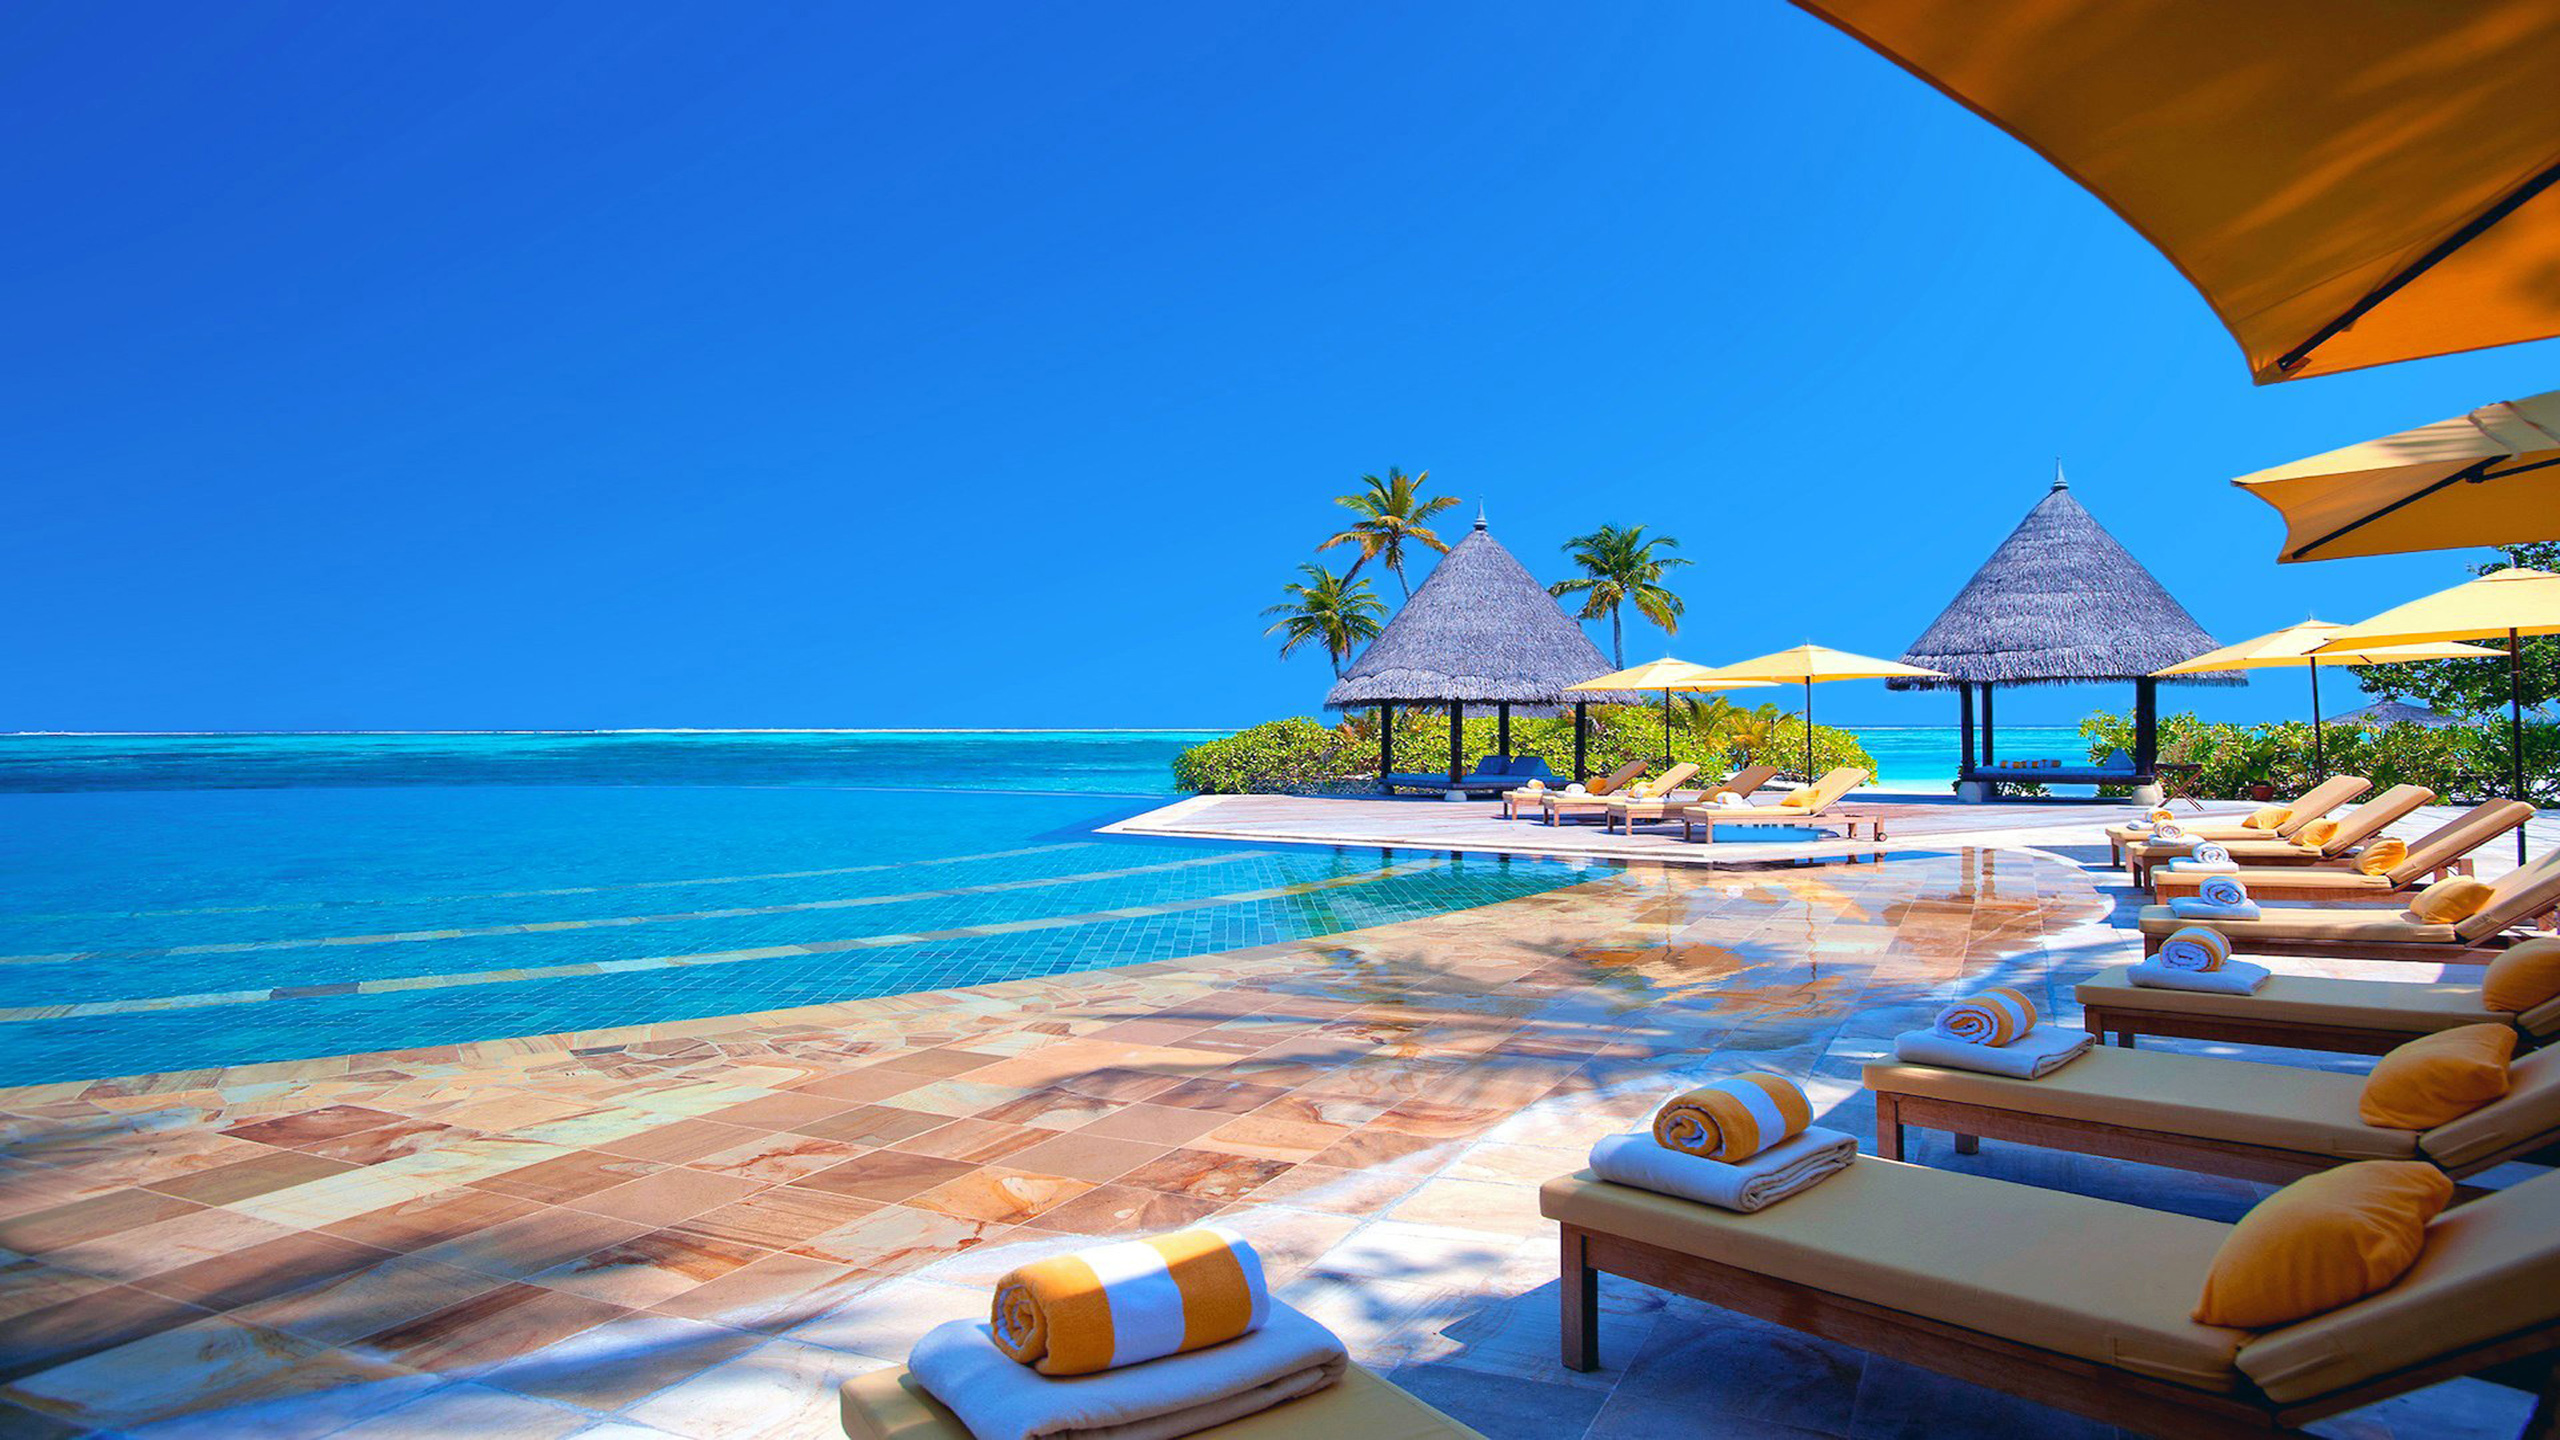 Hotel Terrace Chairs Ocean Maldives Hd Wallpaper 2560x1440 :  